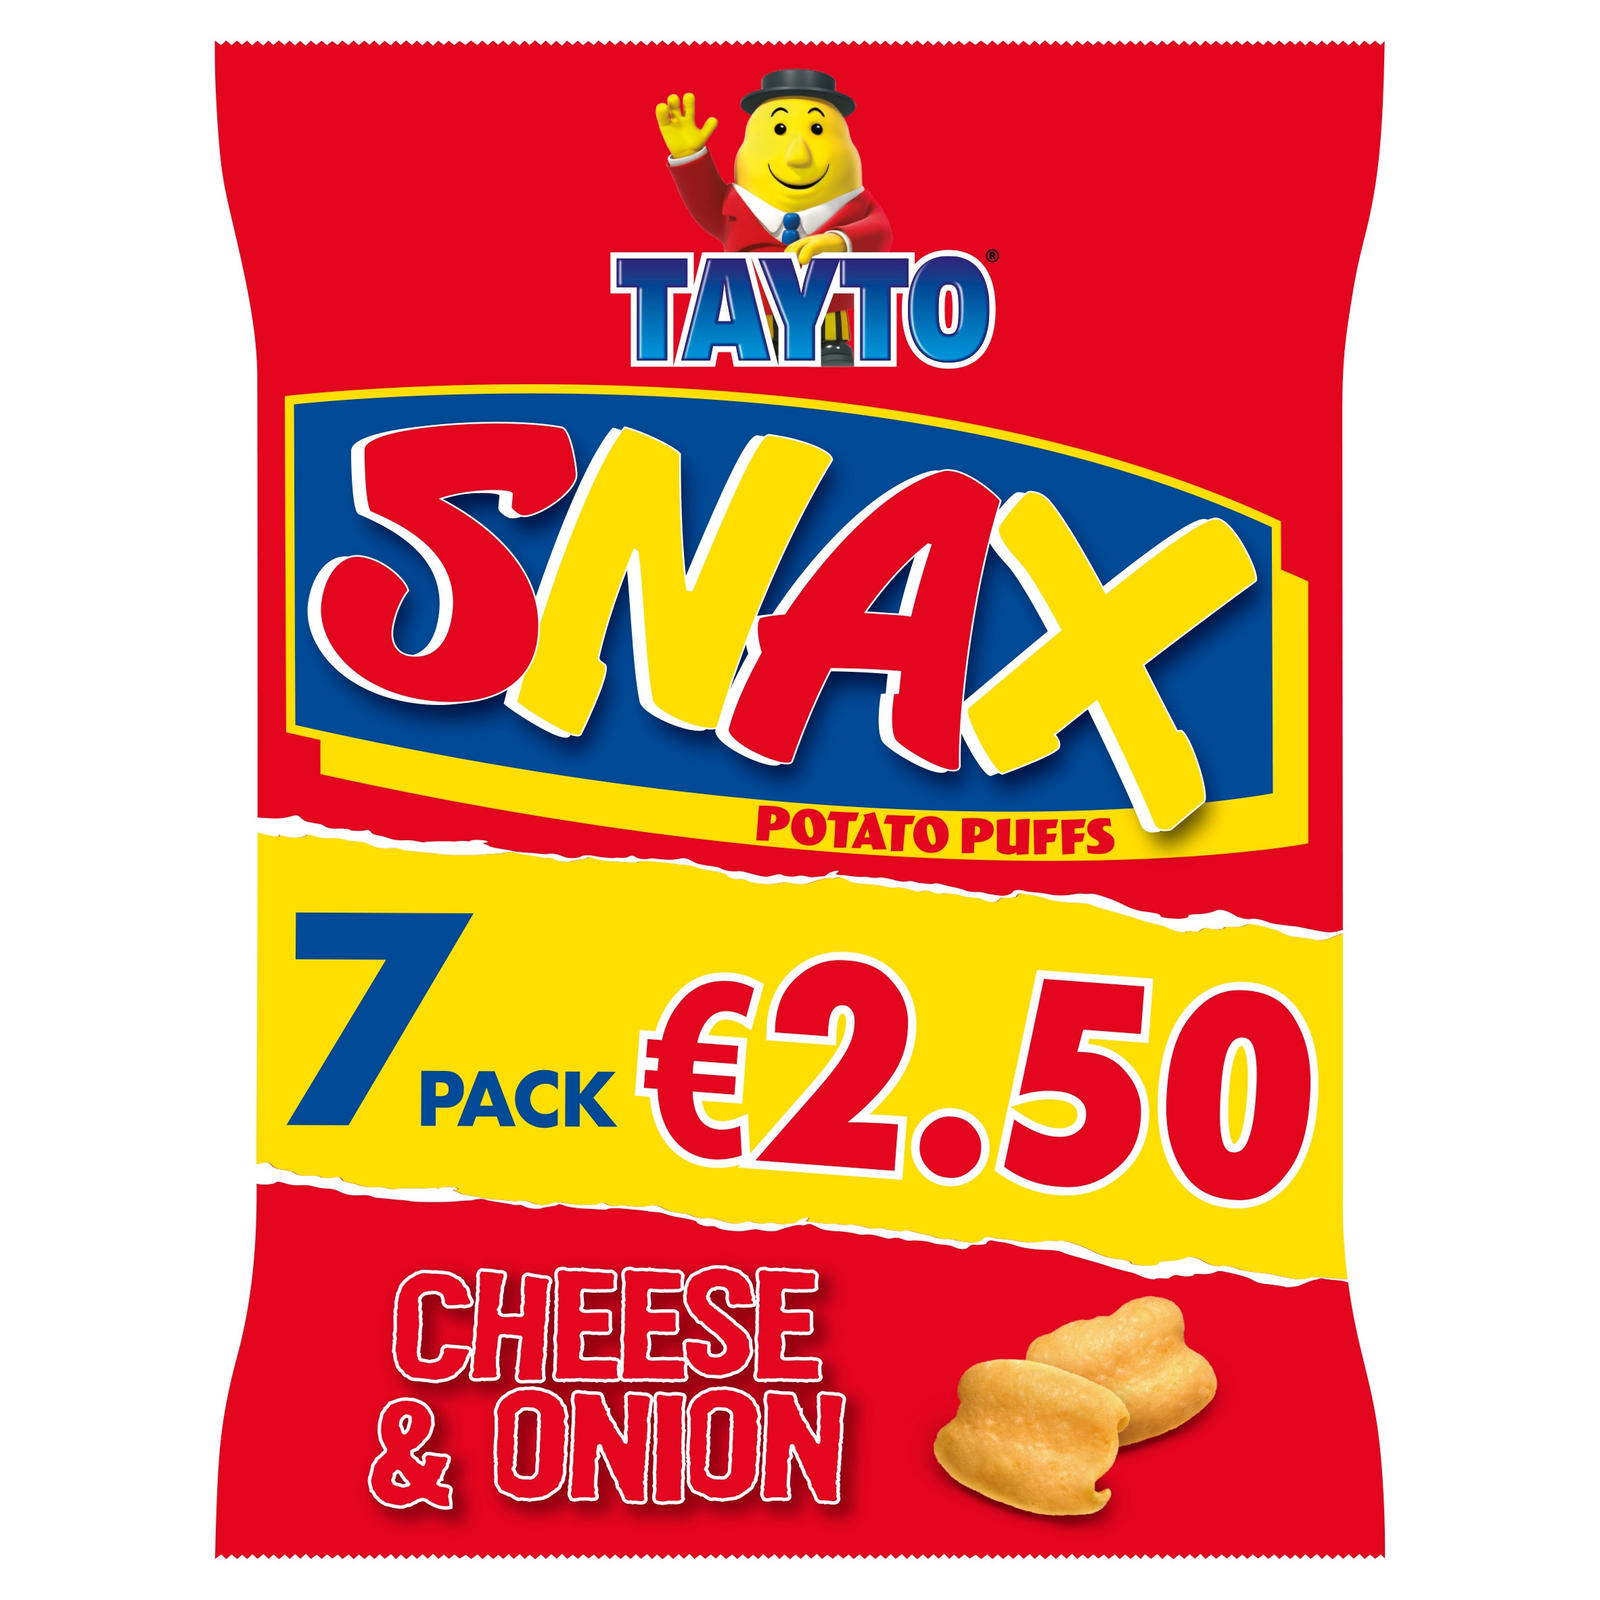 Tayto Snax Potato Puffs Cheese & Onion Flavour 7 x 17g, Multipack Crisps